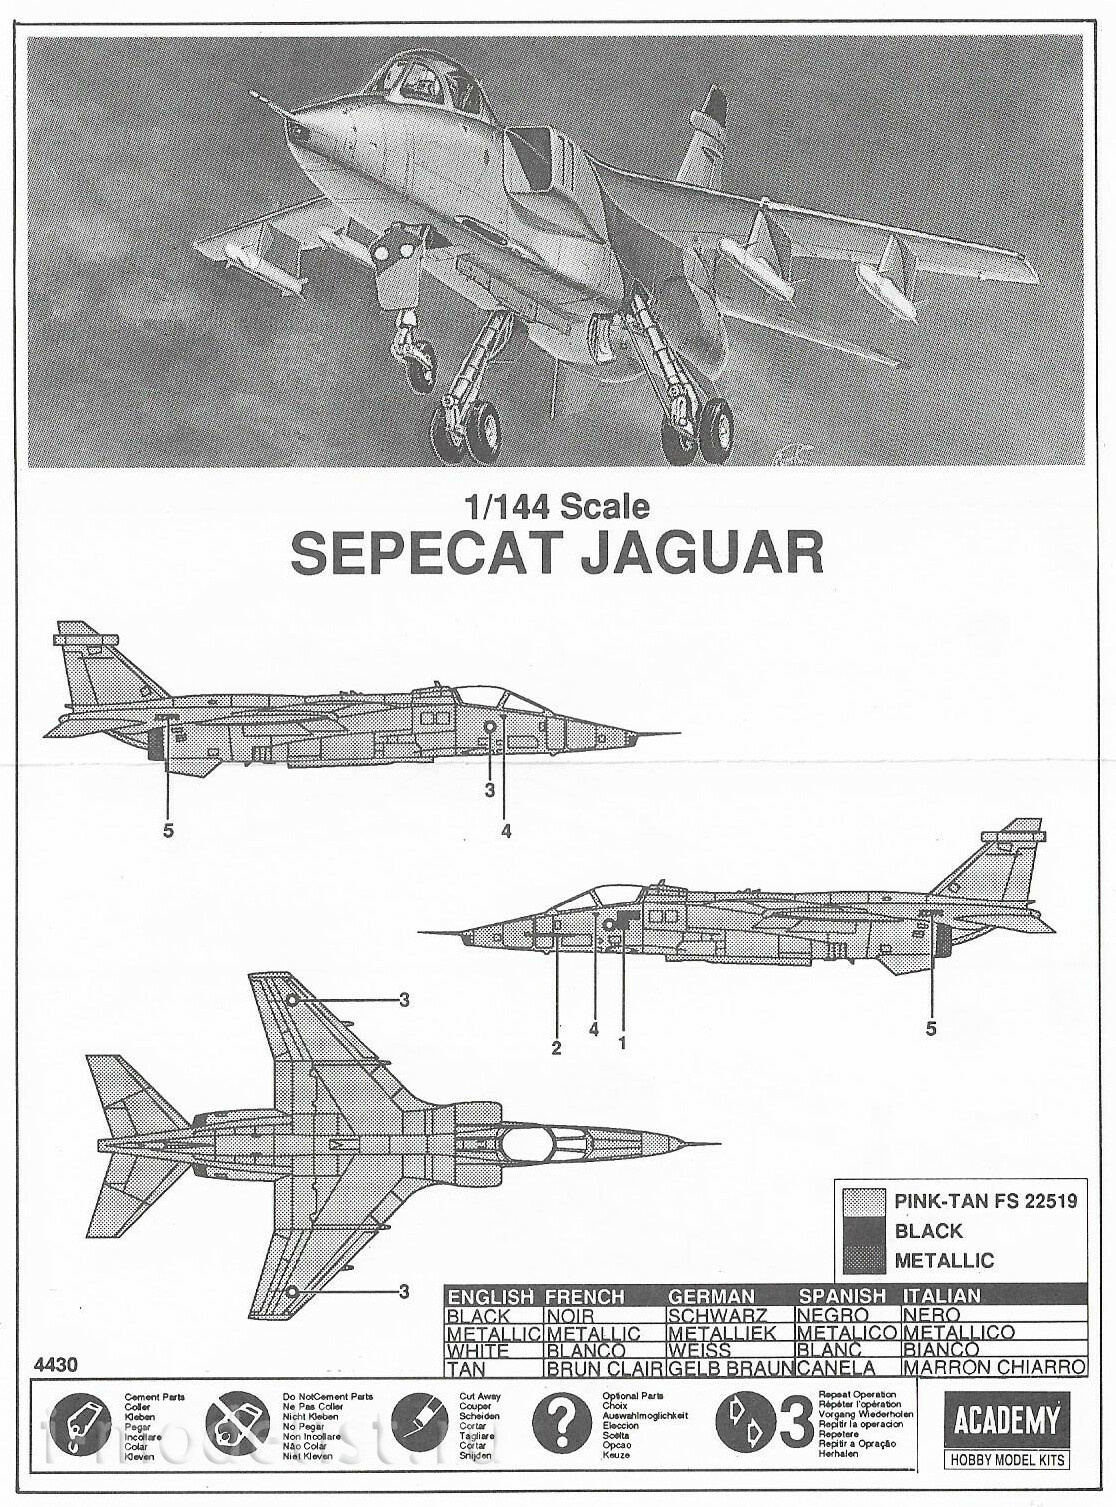 12606 Academy 1/144 Sepecat Jaguar Fighter-bomber